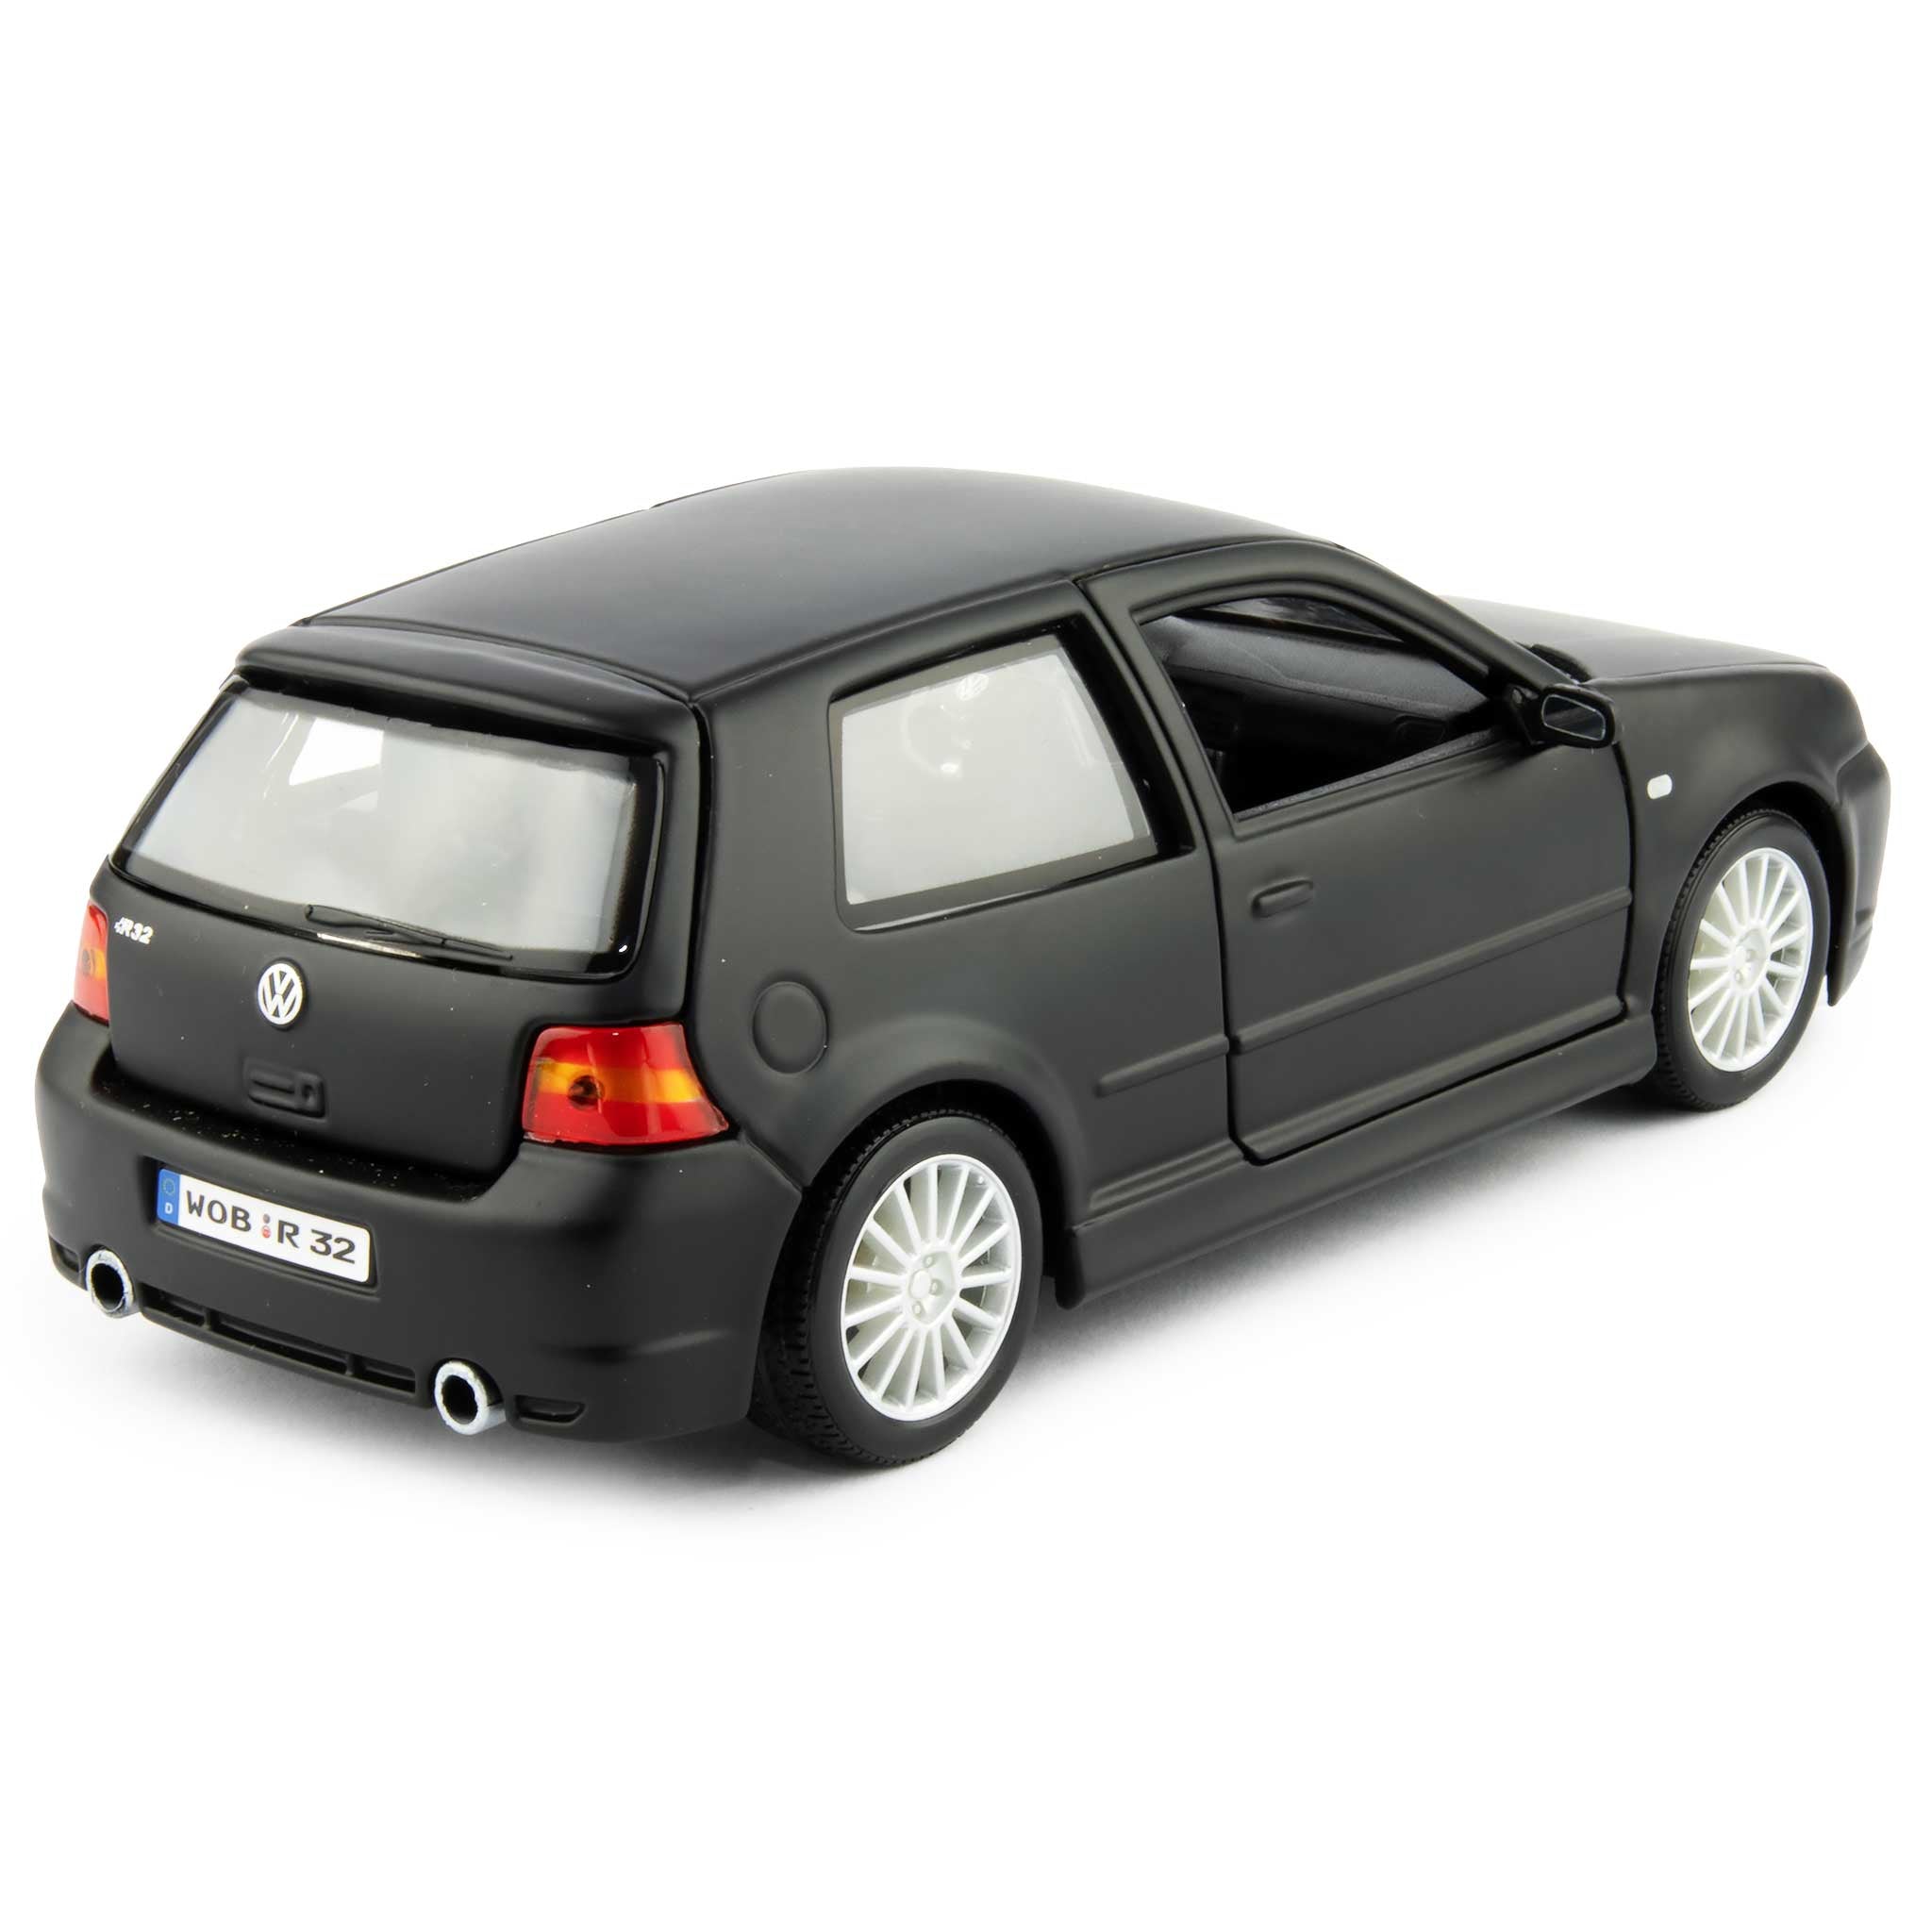 Volkswagen Golf R32 Miniature 1:24